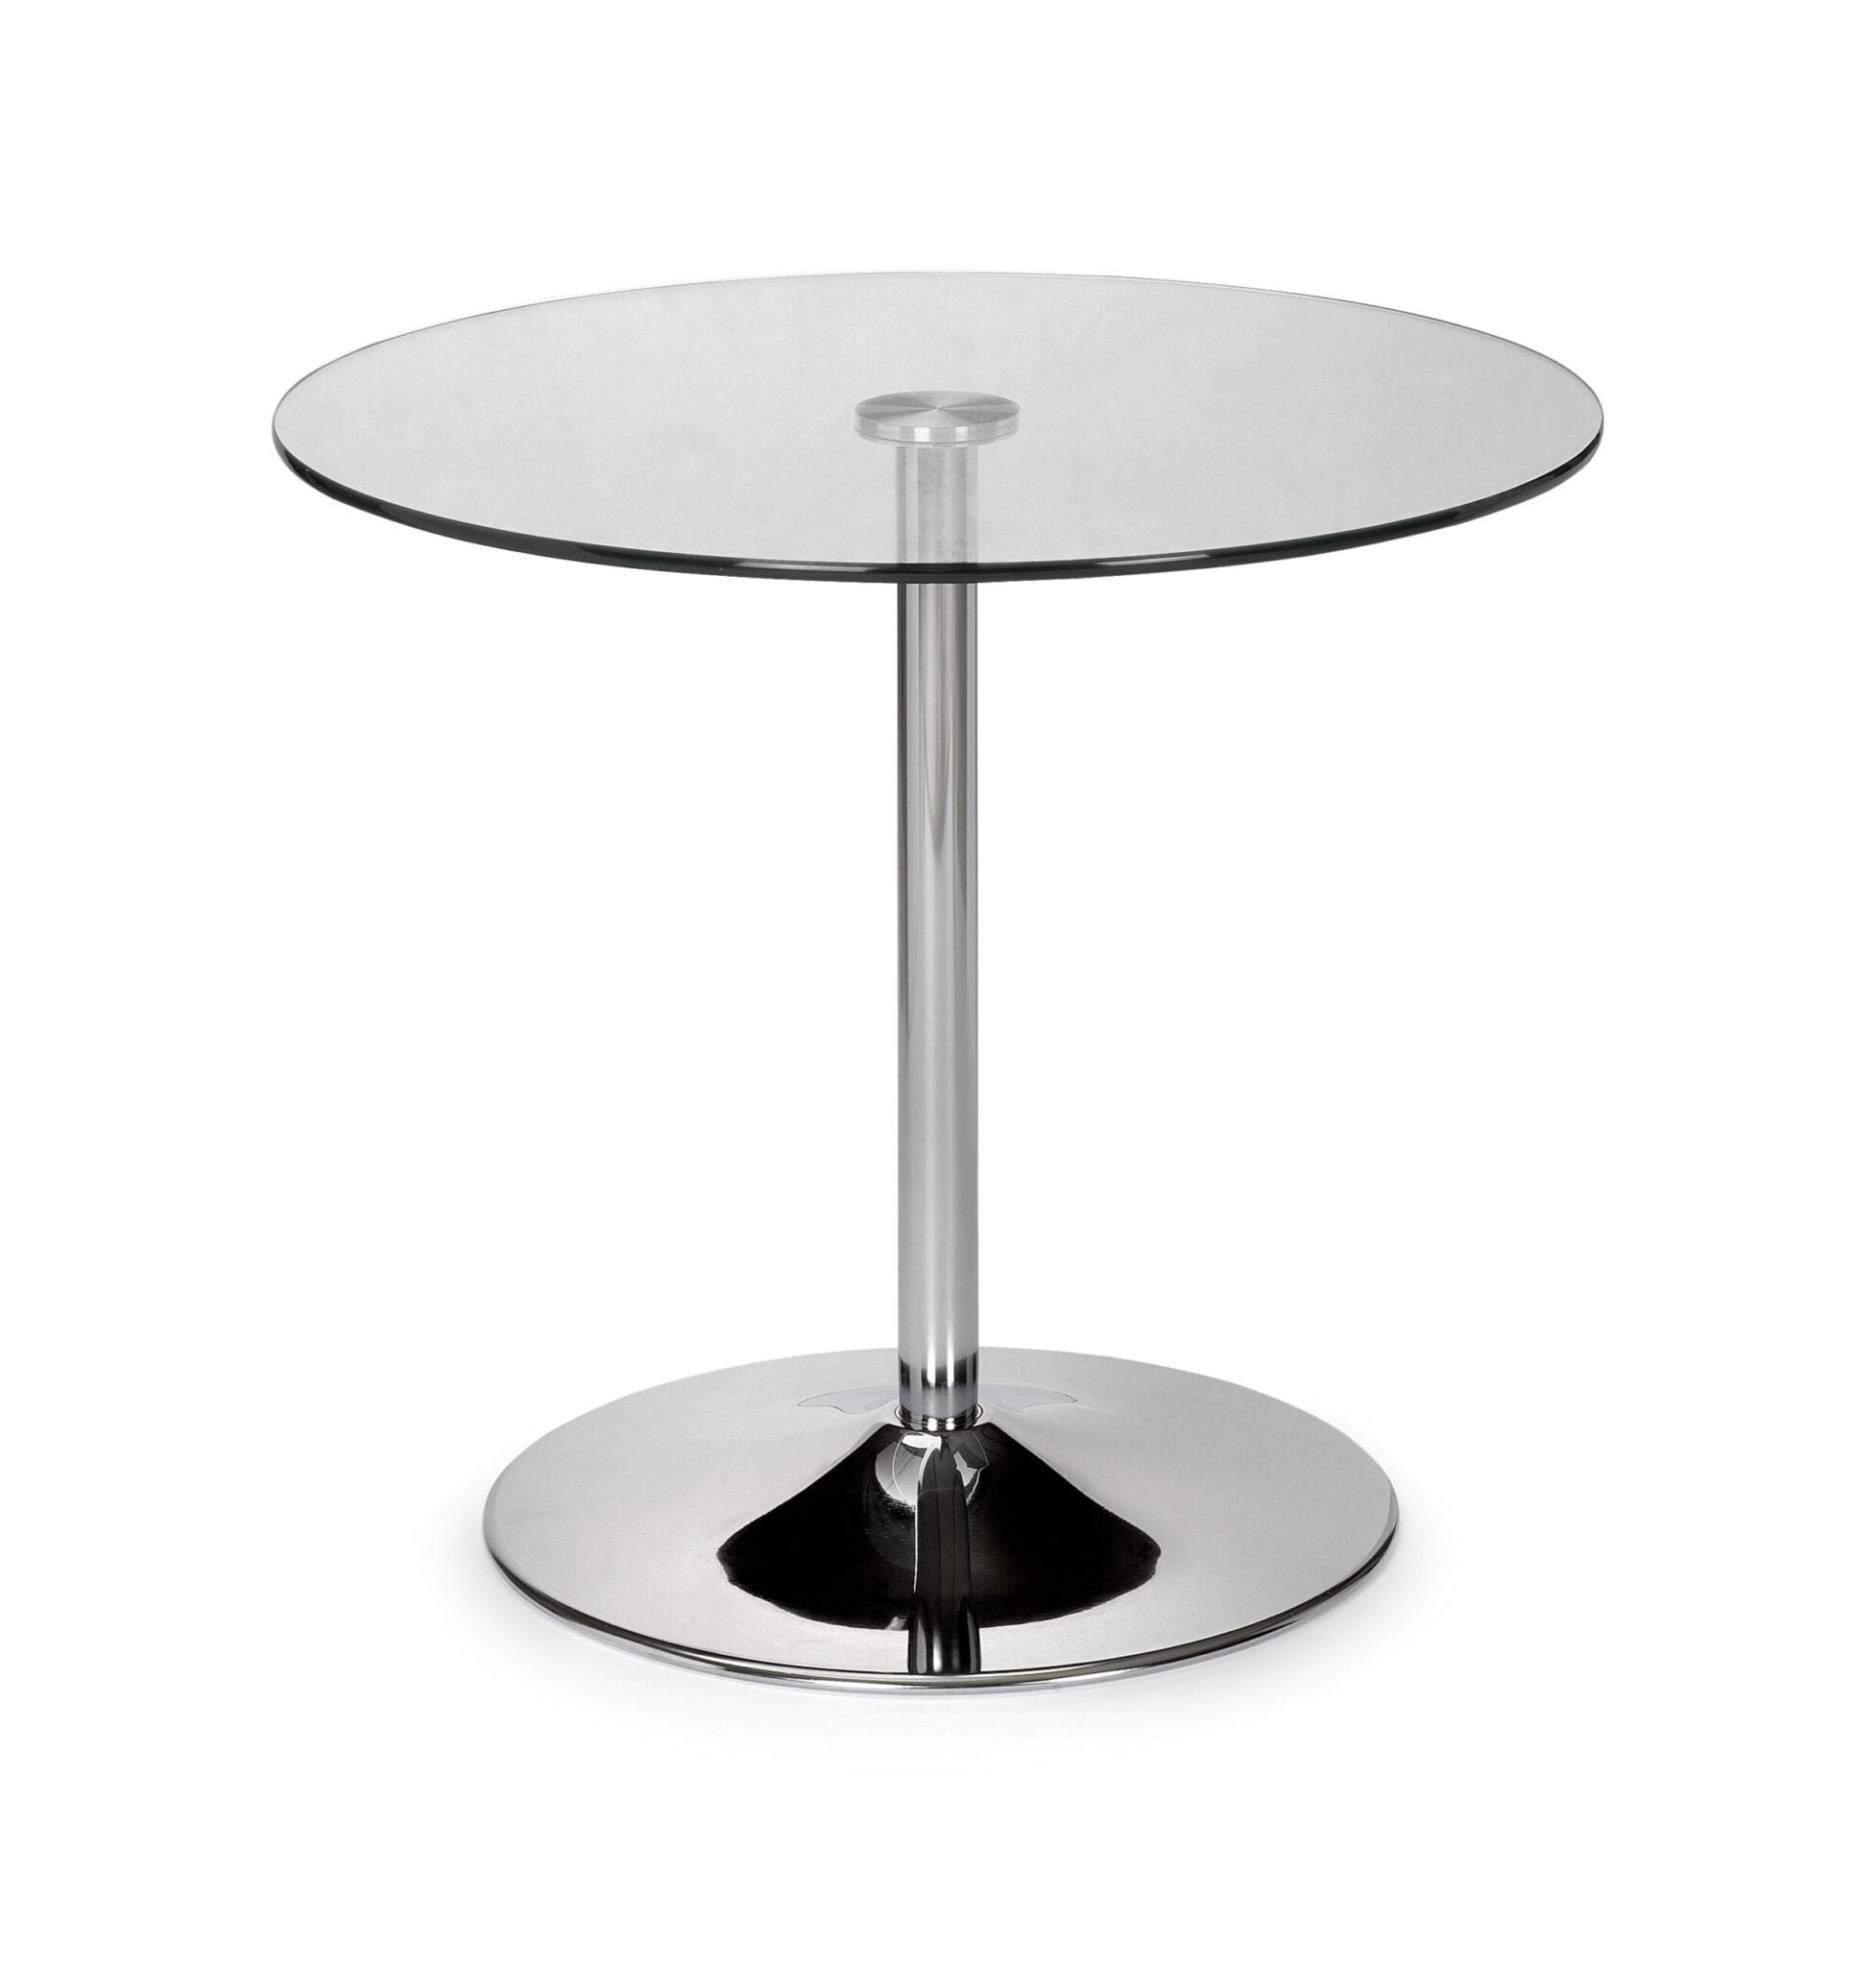 Pontus Chrome & Glass Pedestal Table